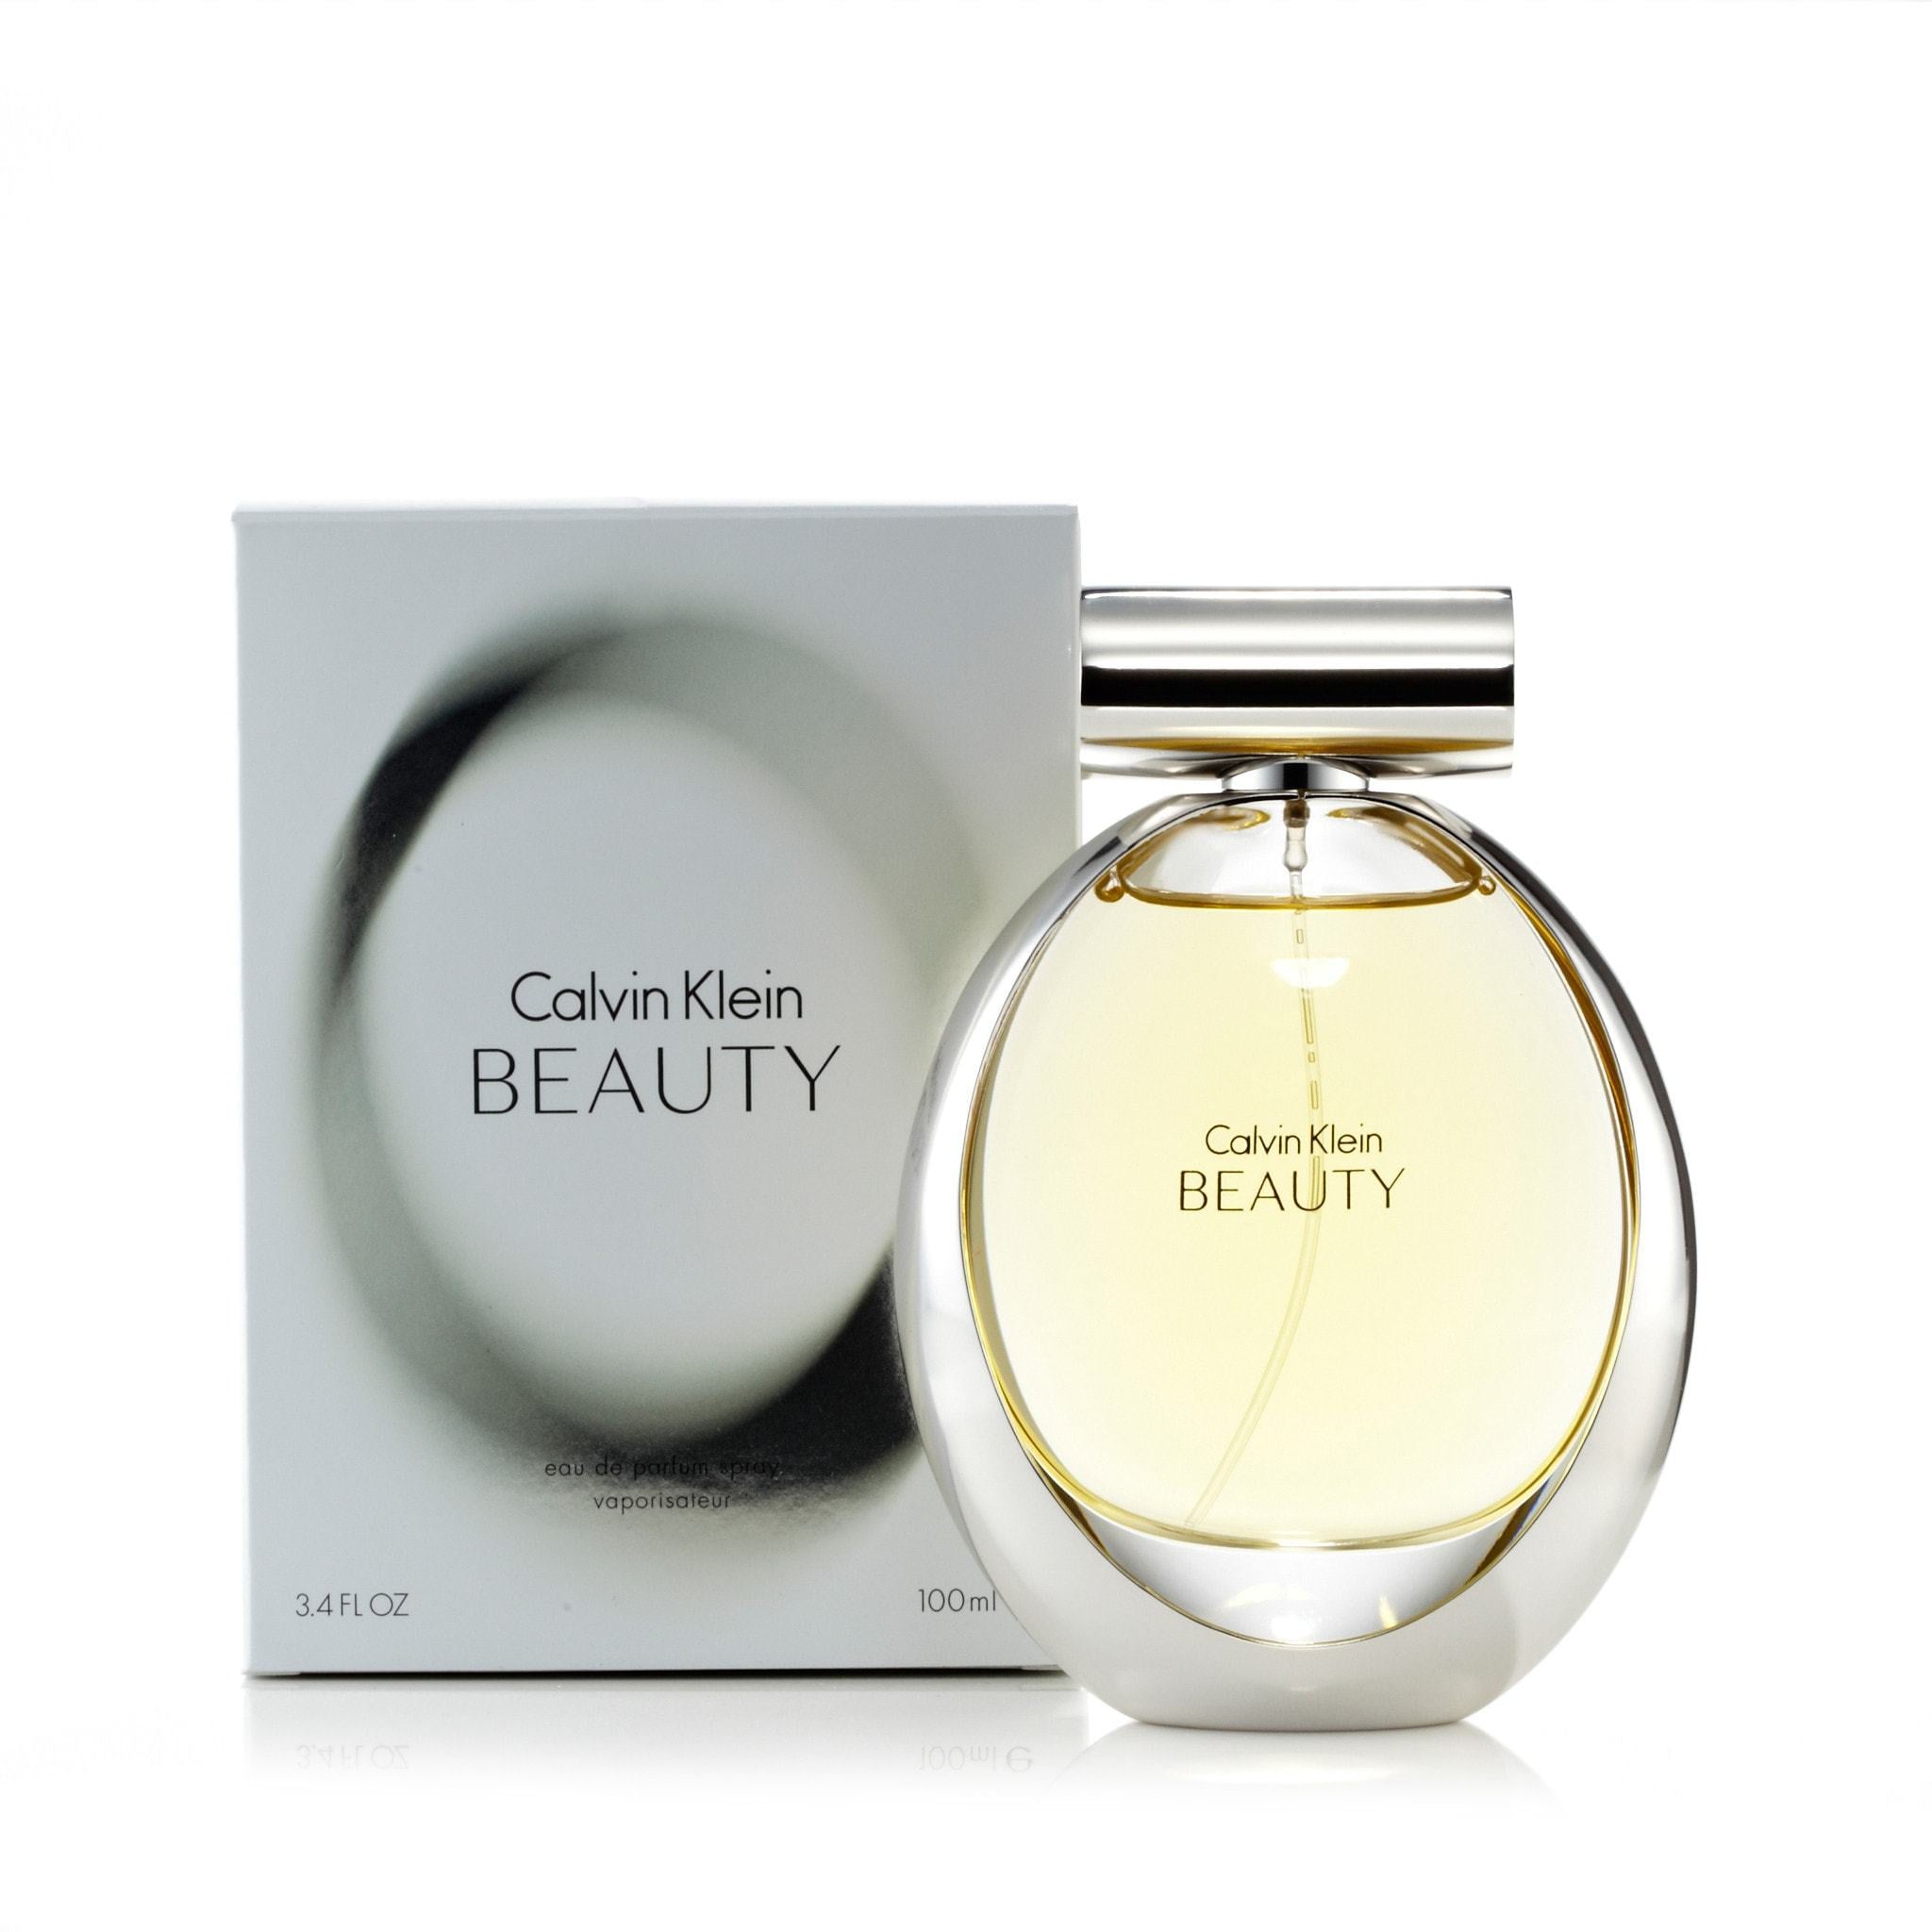 Beauty by Calvin Klein 3.4 oz Eau de Parfum Spray / Women